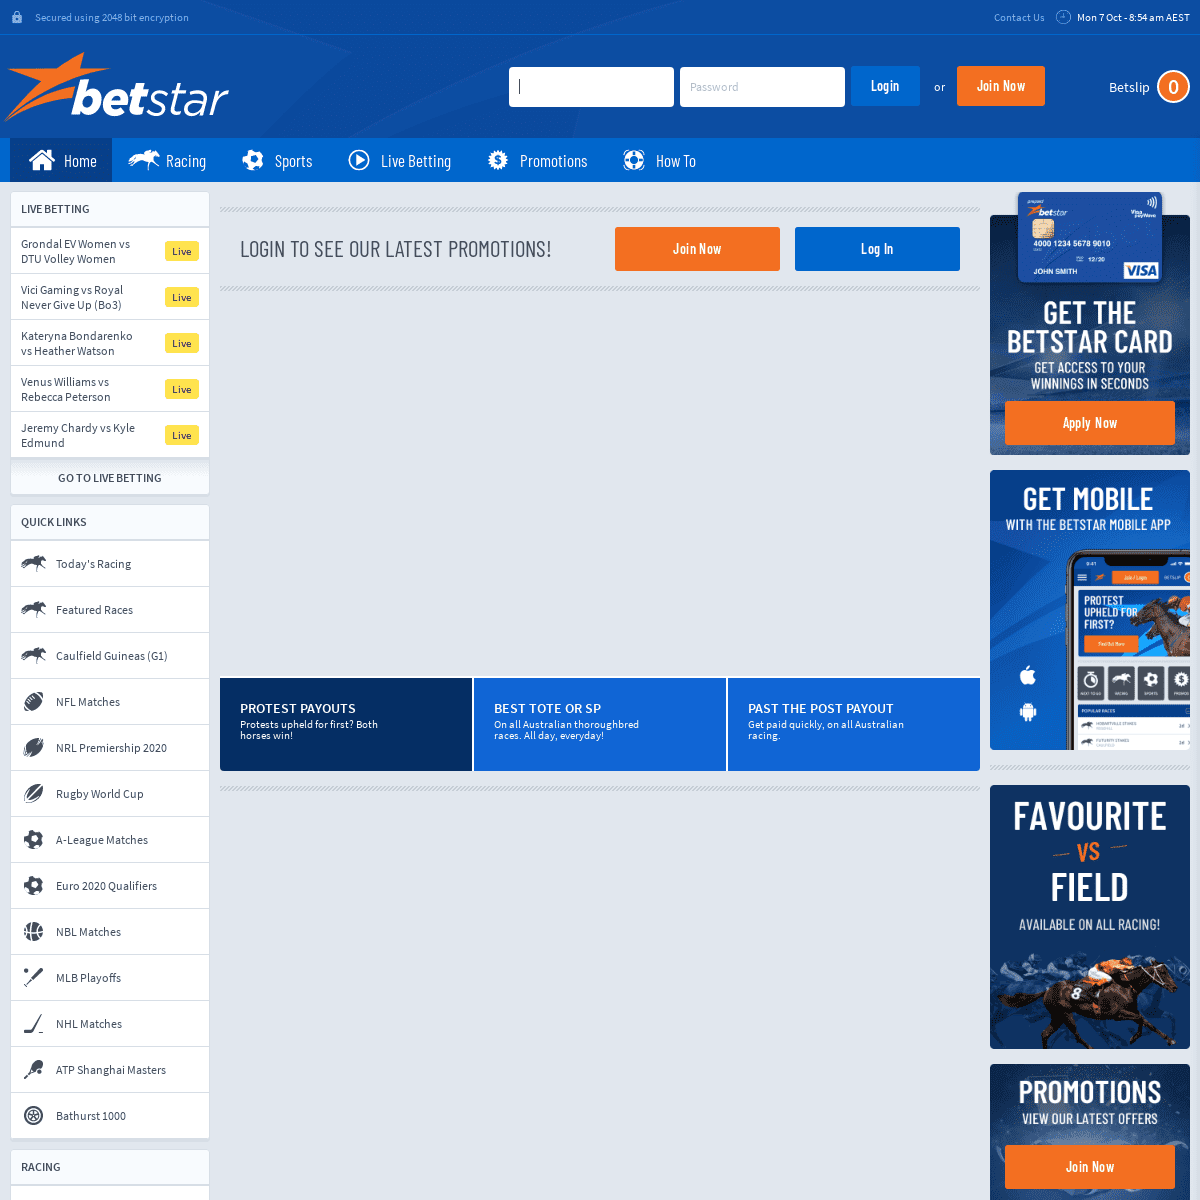 A complete backup of betstar.com.au